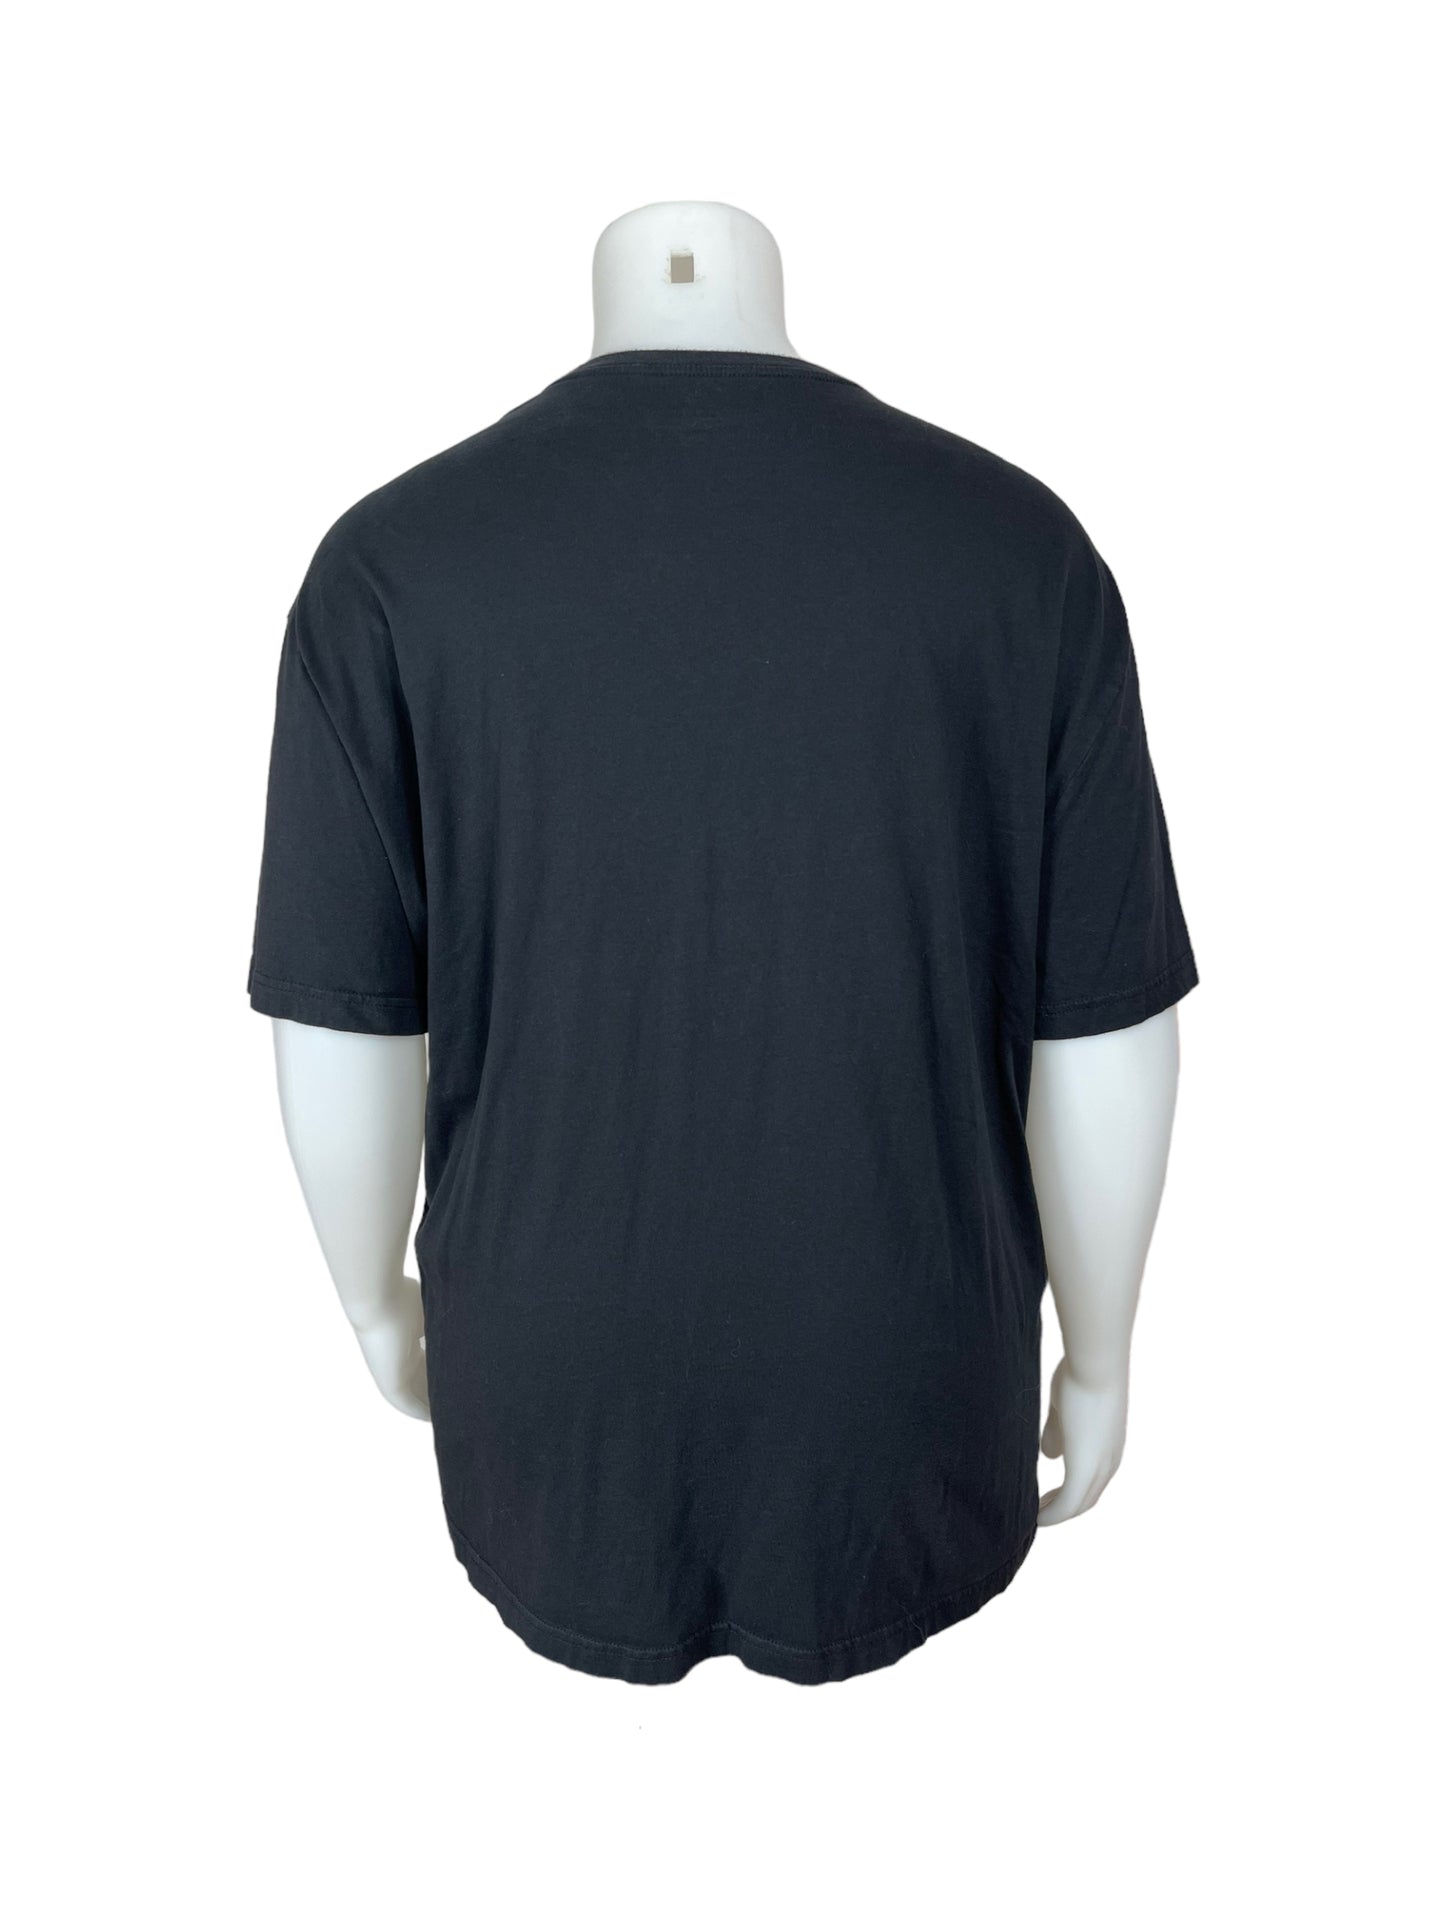 “George” Plain Black T-Shirt (5XL)